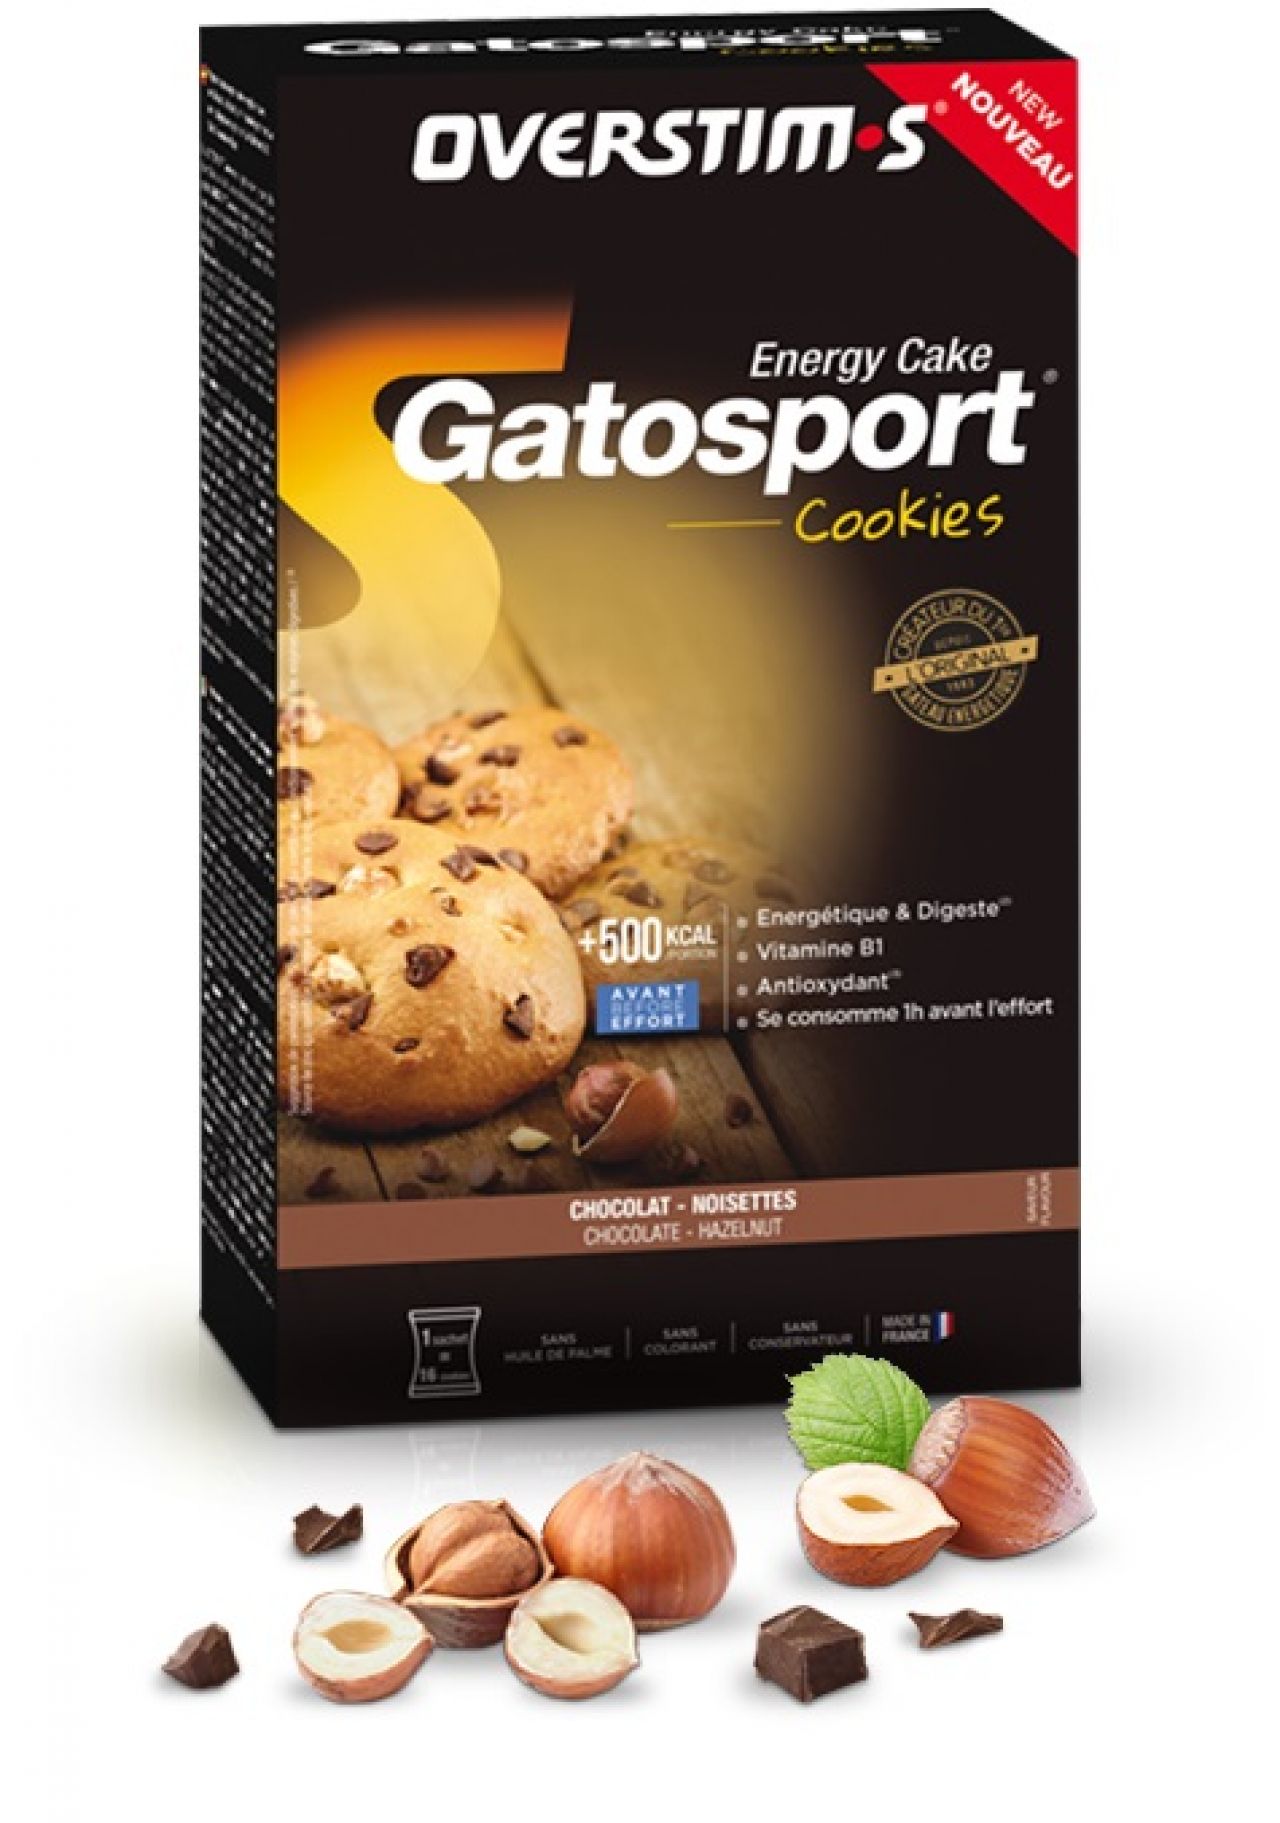 OVERSTIMS GATOSPORT  COOKIES Dietetique avant effort